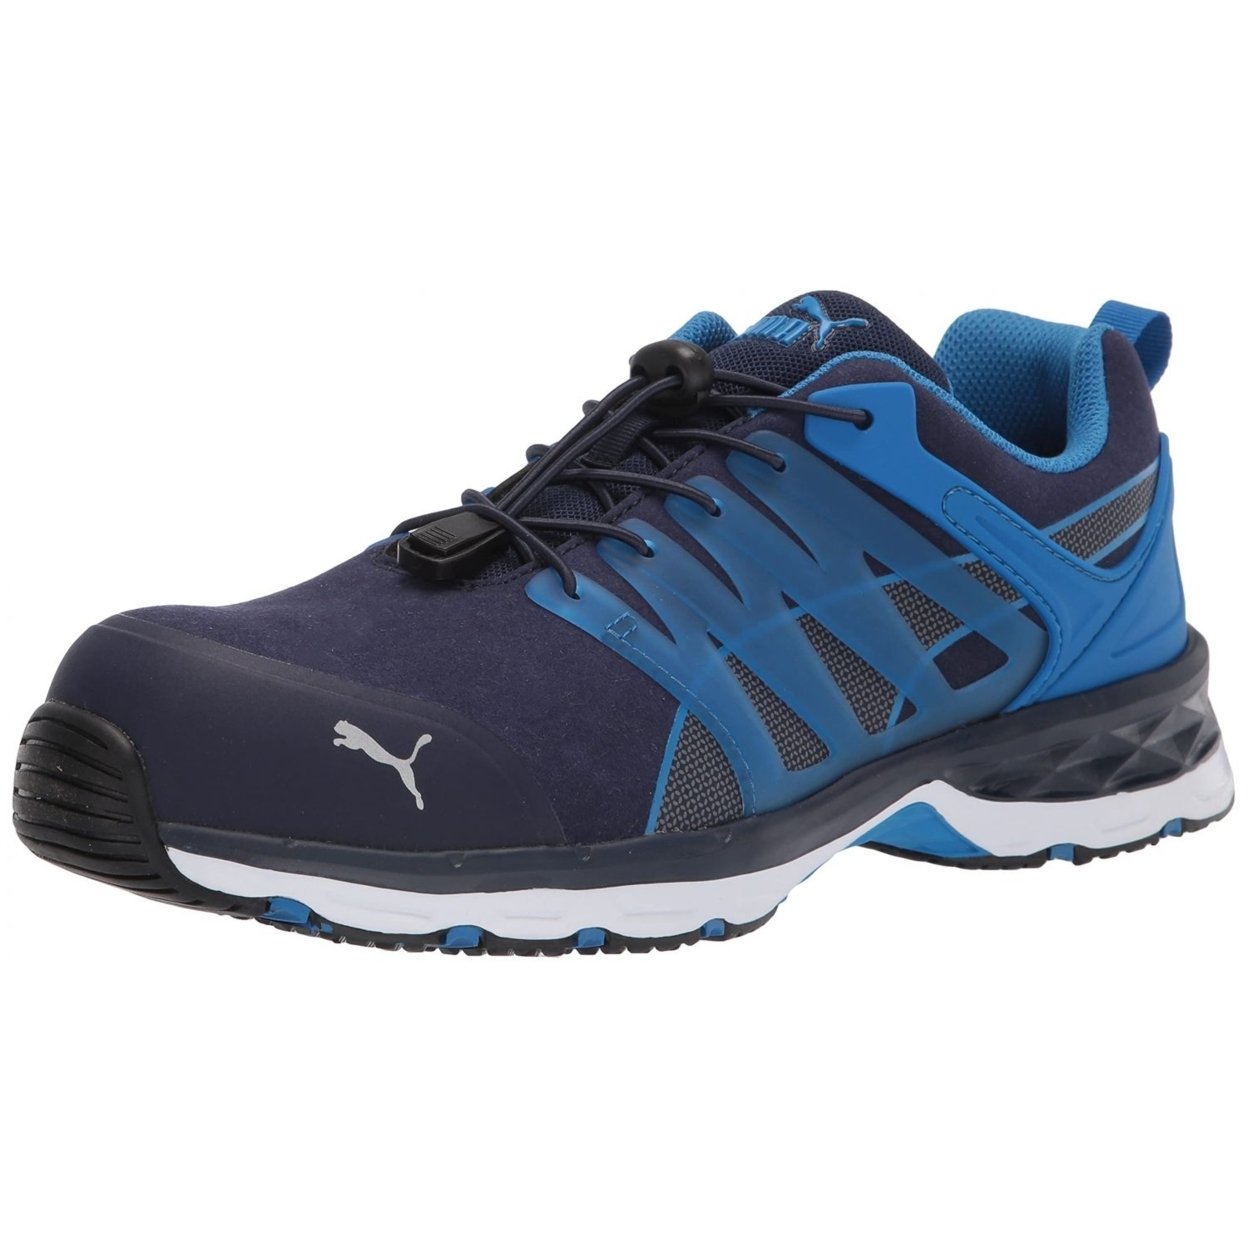 PUMA Safety Men's Velocity 2.0 Composite Toe ESD Work Shoe Blue - 643855 ONE SIZE BLUE - BLUE, 8.5